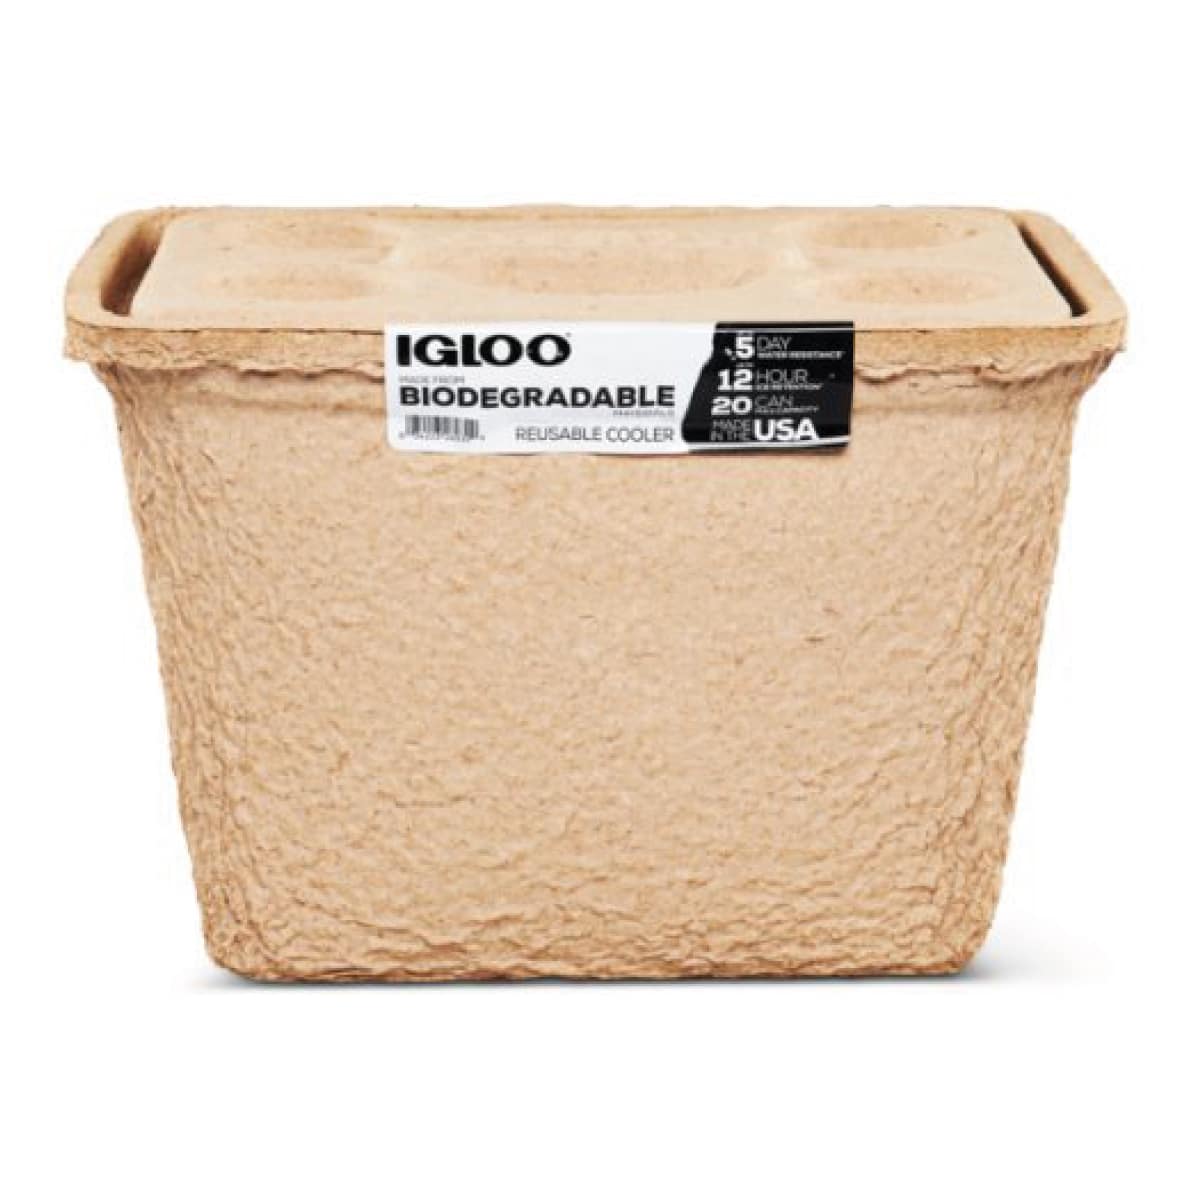 Nevera rígida biodegradable de IGLOO Recool eco friendly con capacidad de 15 litros